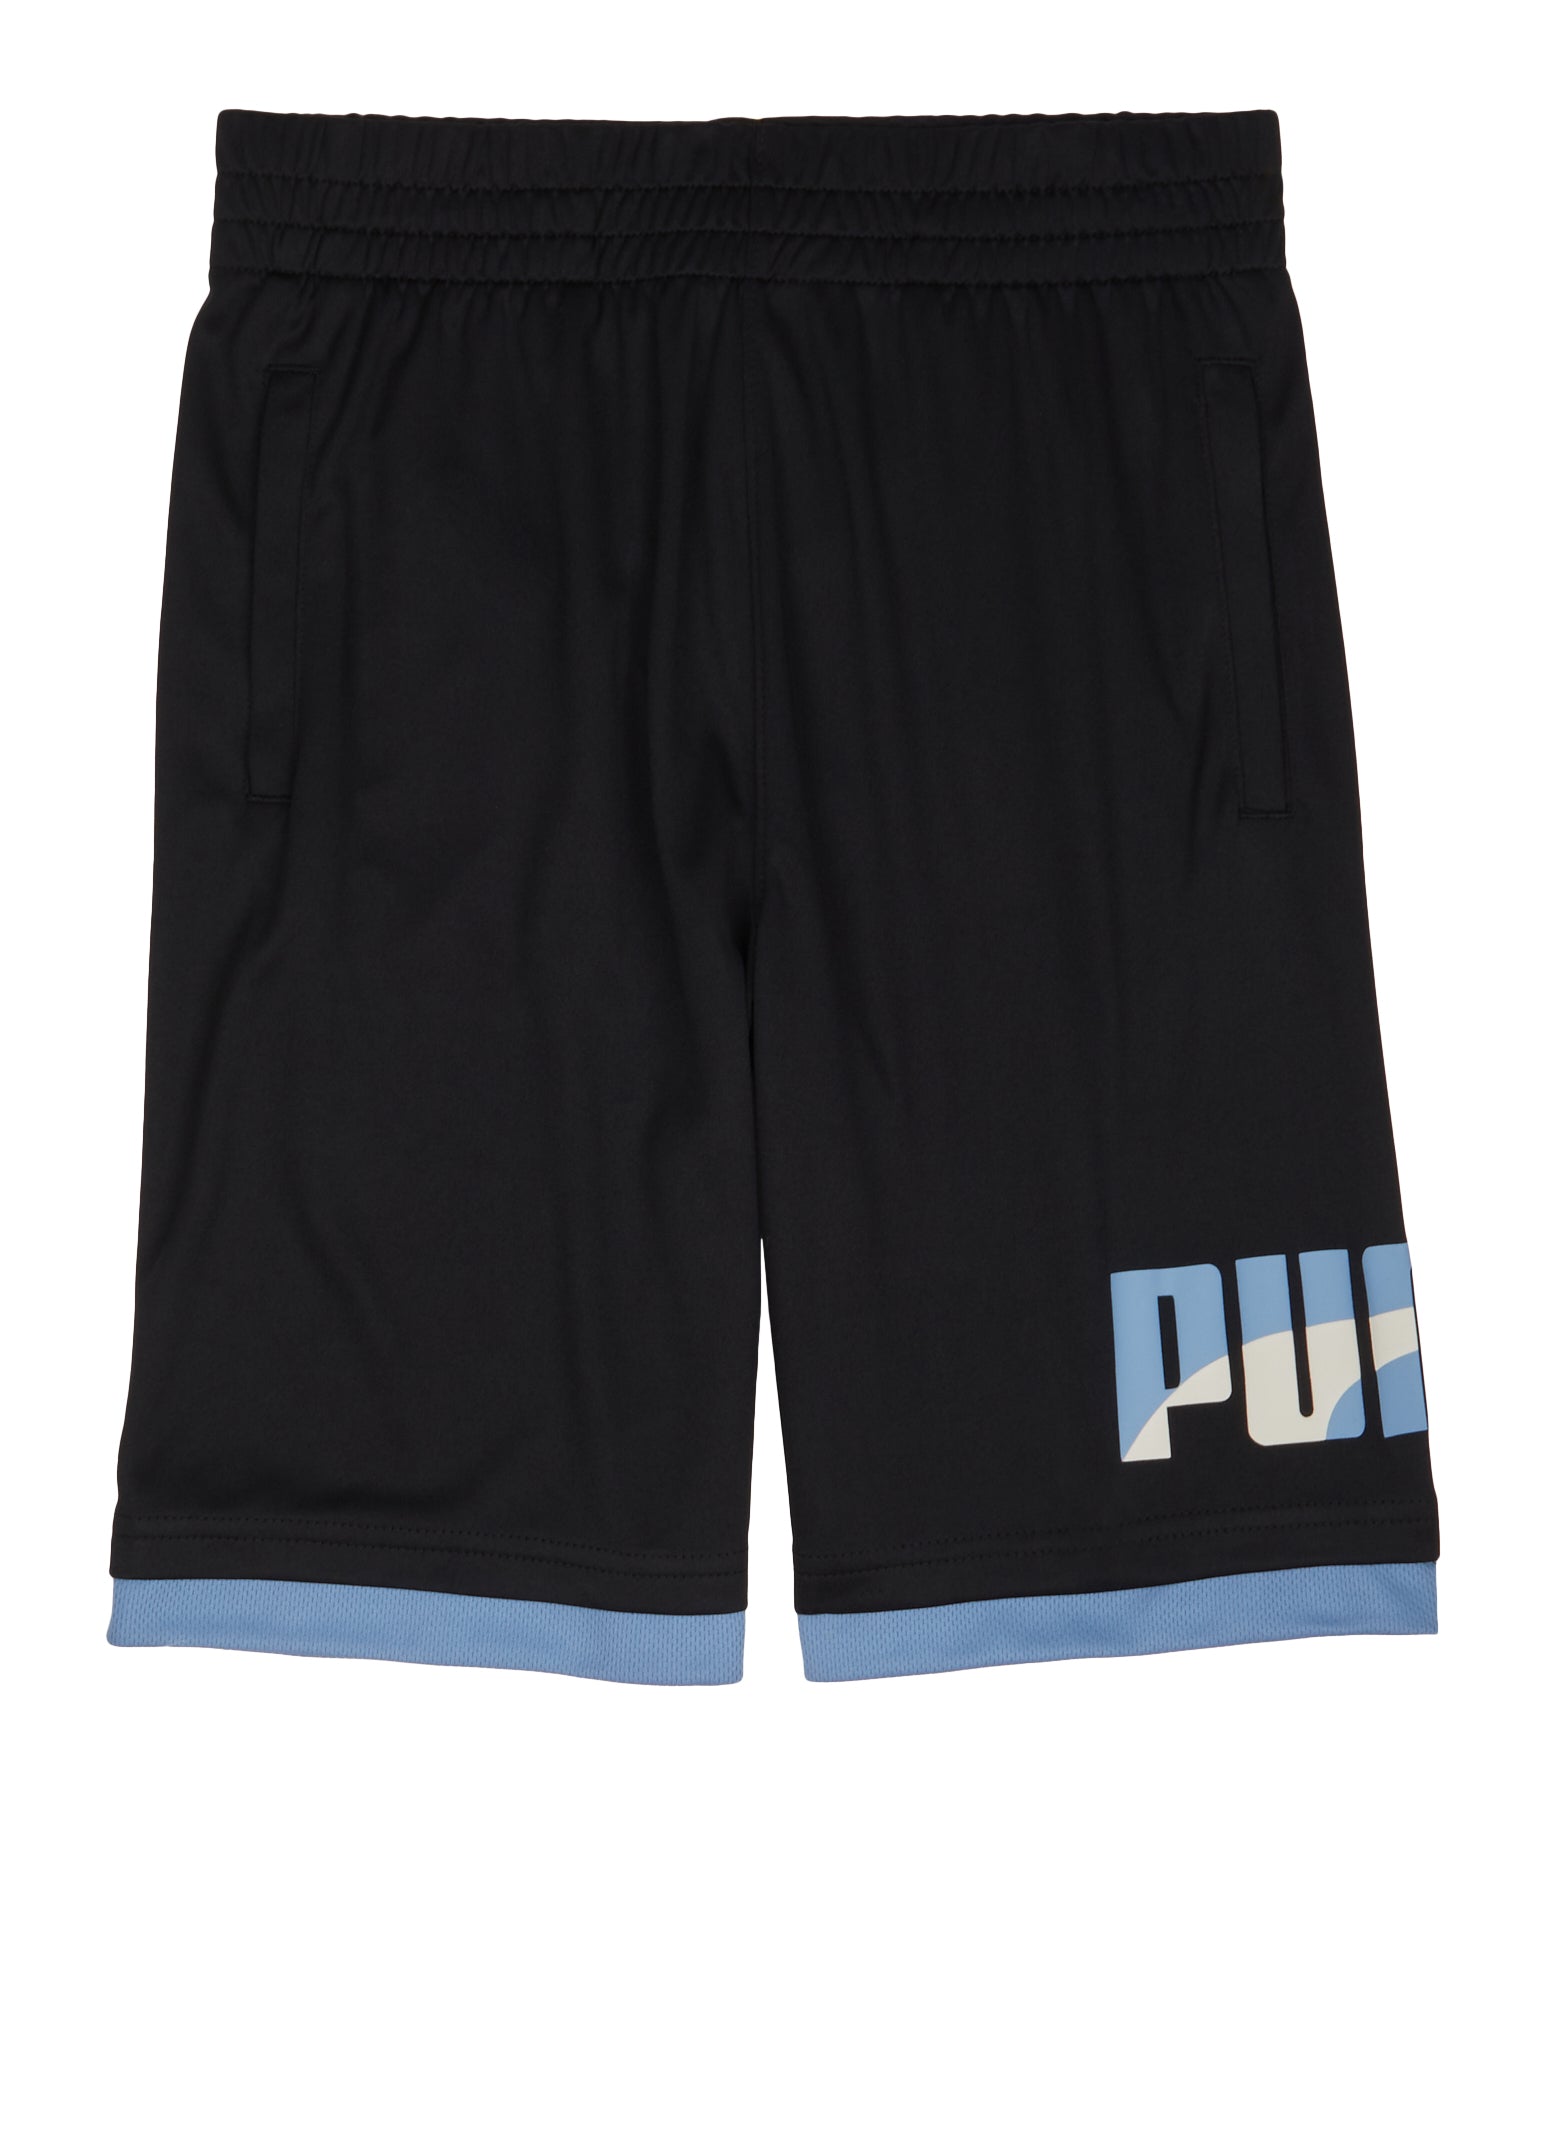 Boys Puma Basketball Shorts, Black, Size 14-16